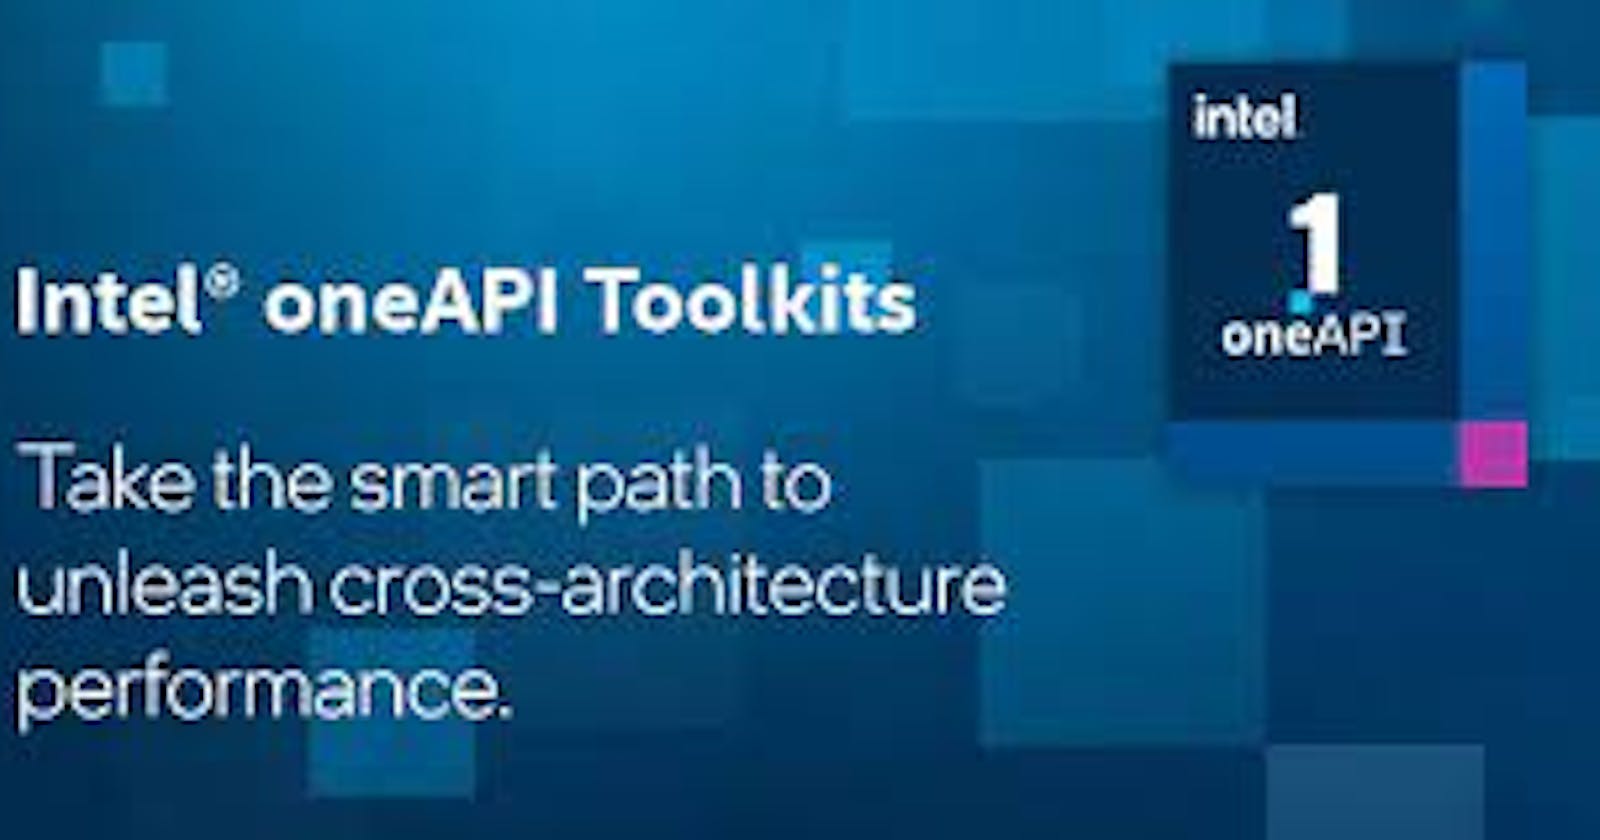 Installing Intel One API AI-Analytics toolkit on Kaggle